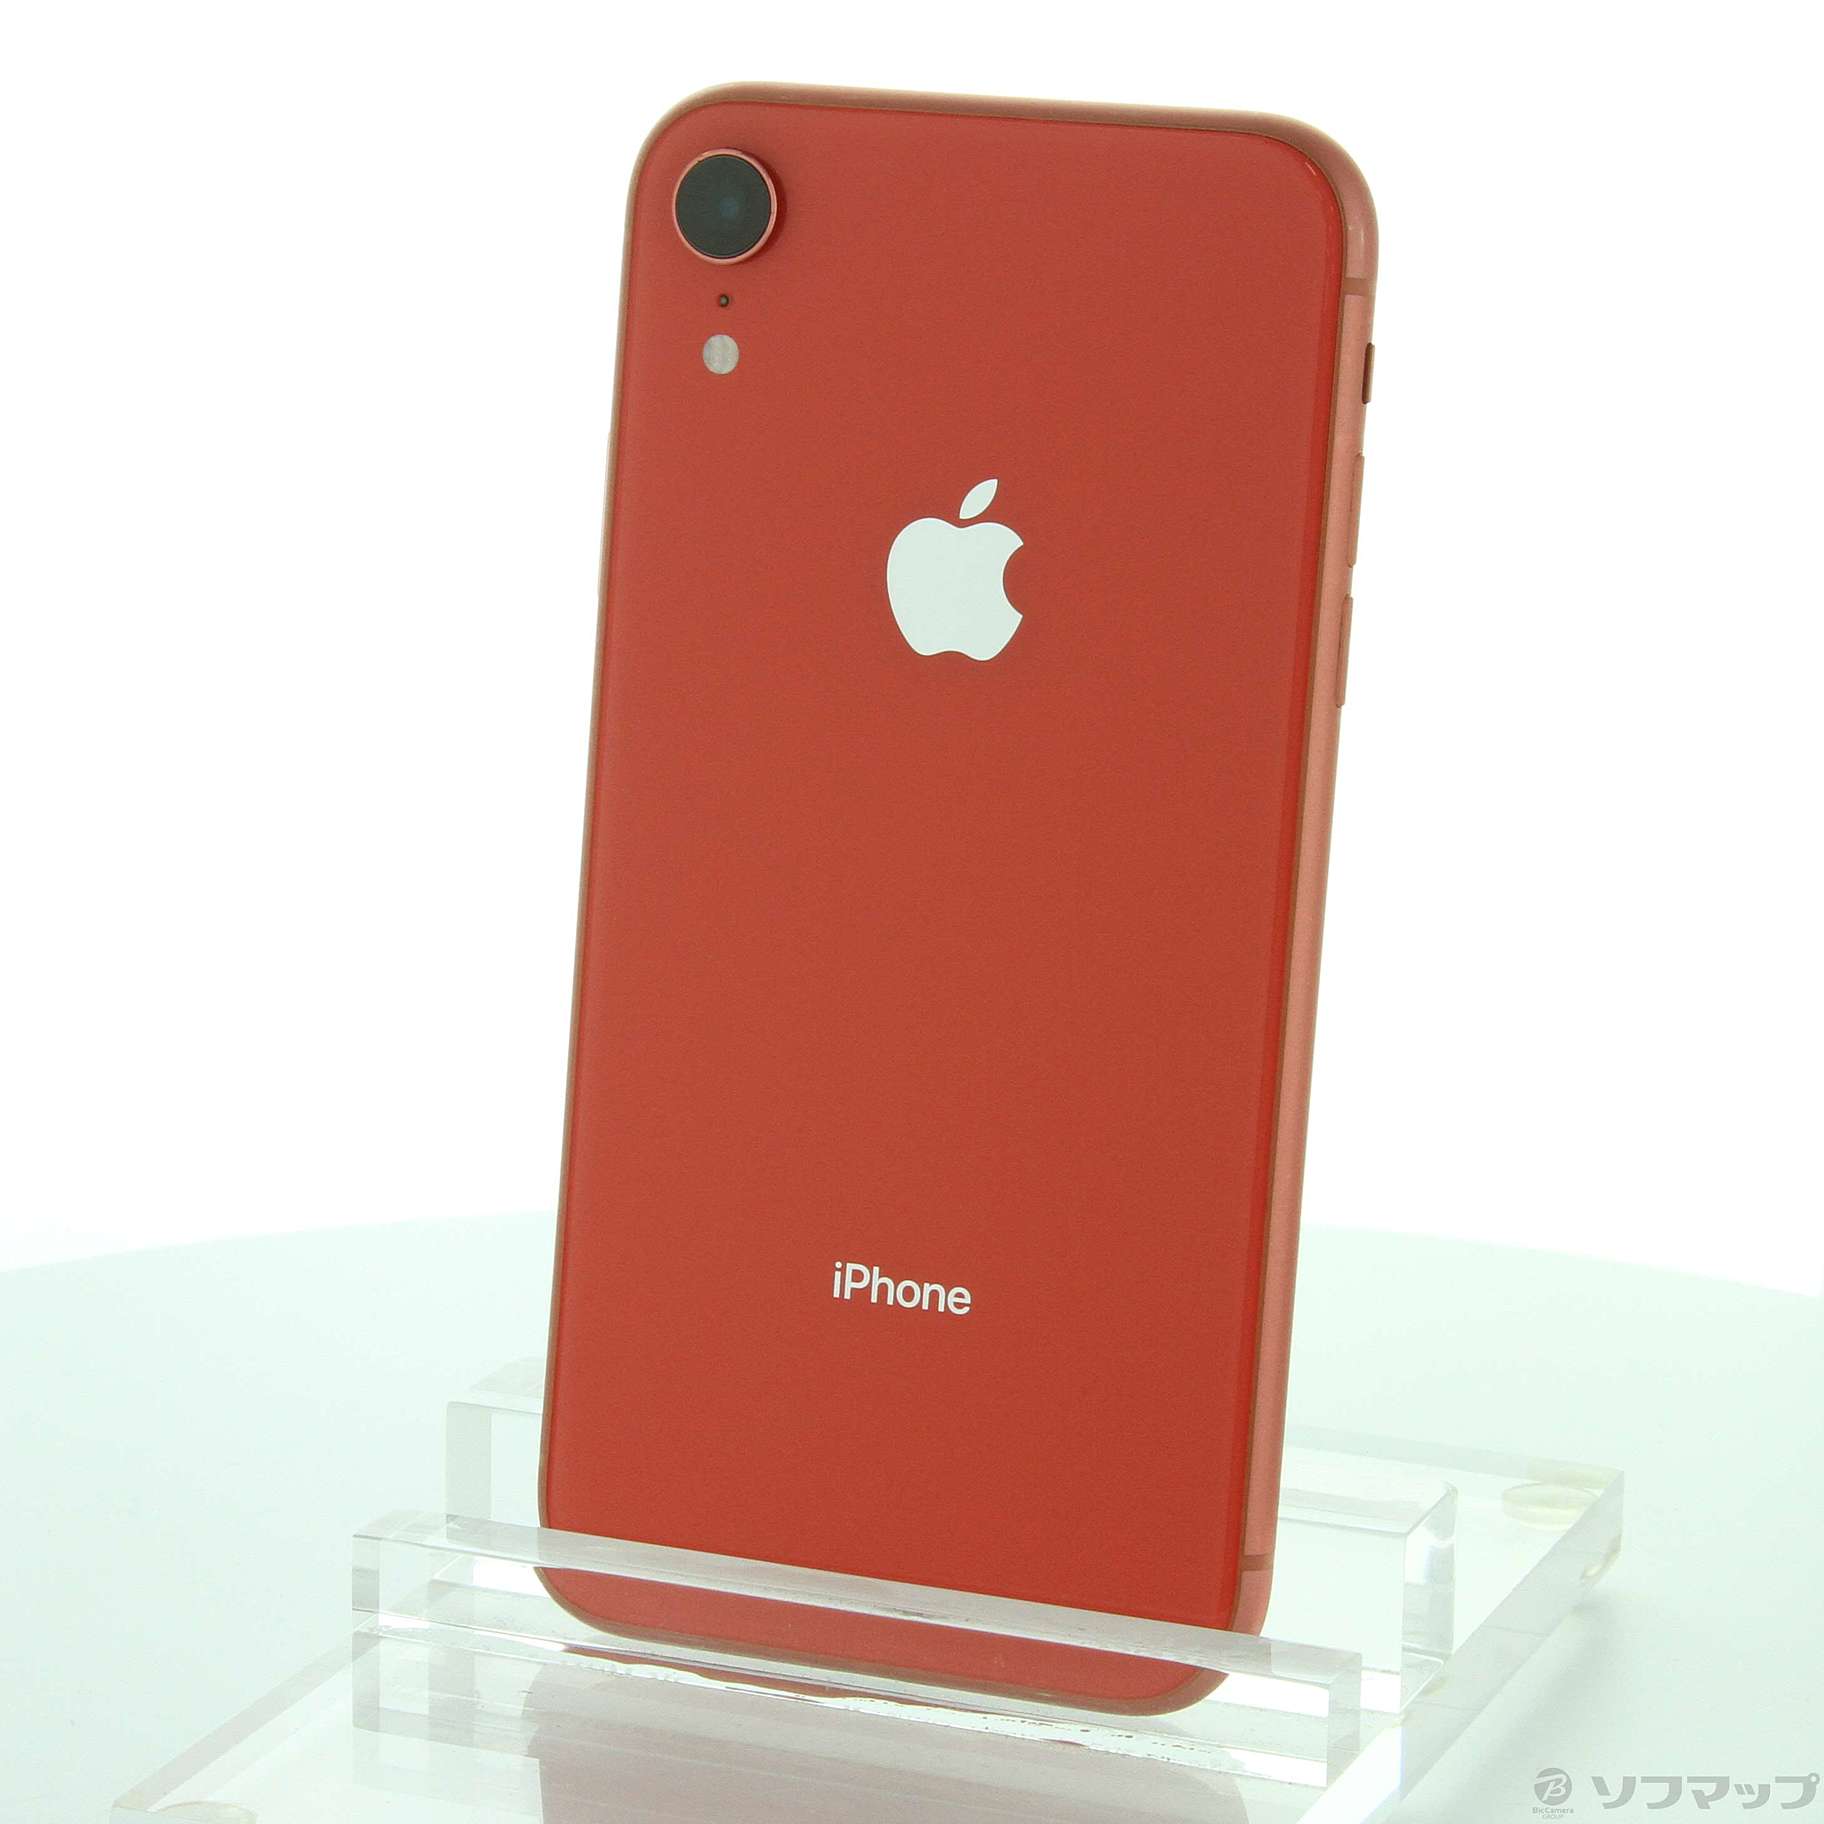 iPhone XR Coral 64 GB Softbank - coastalmind.com